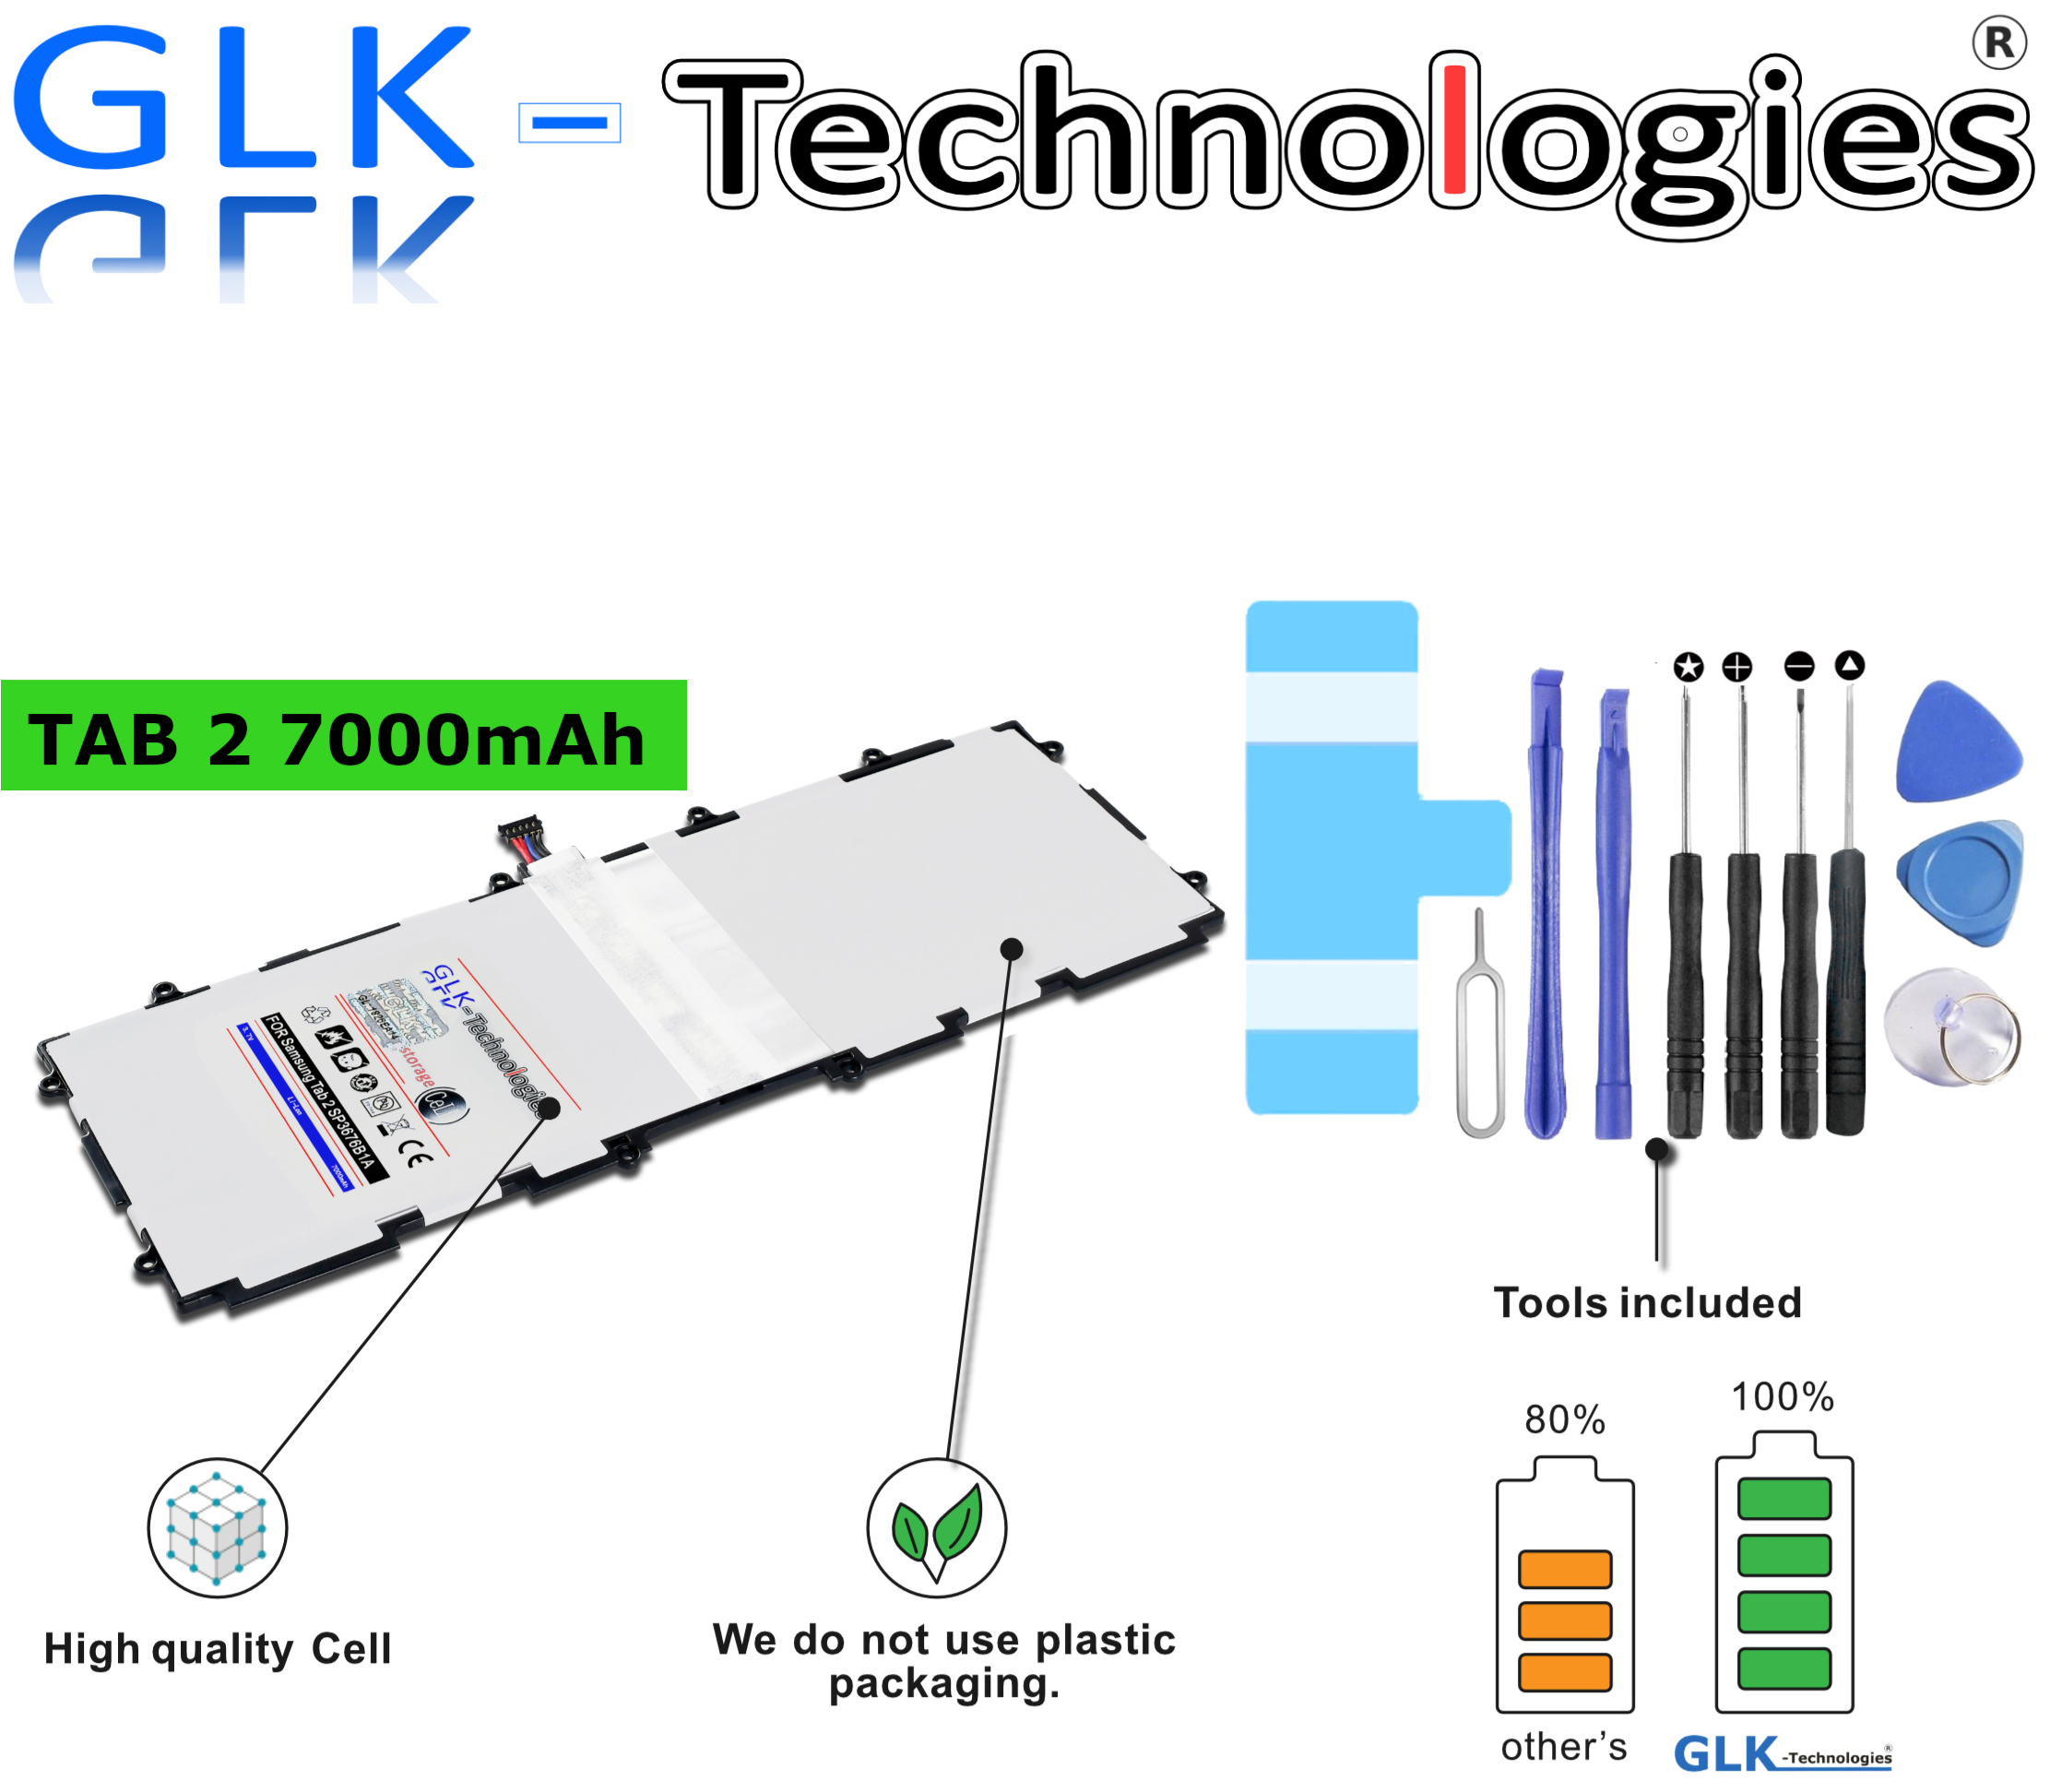 GLK-TECHNOLOGIES High Akku Power GT-N8000 Tool Tab Ersatz Galaxy GT-N8010 7000mAh Akku + Galaxy Tablet 2 Li-Ion Akku Werkzeug Samsung für